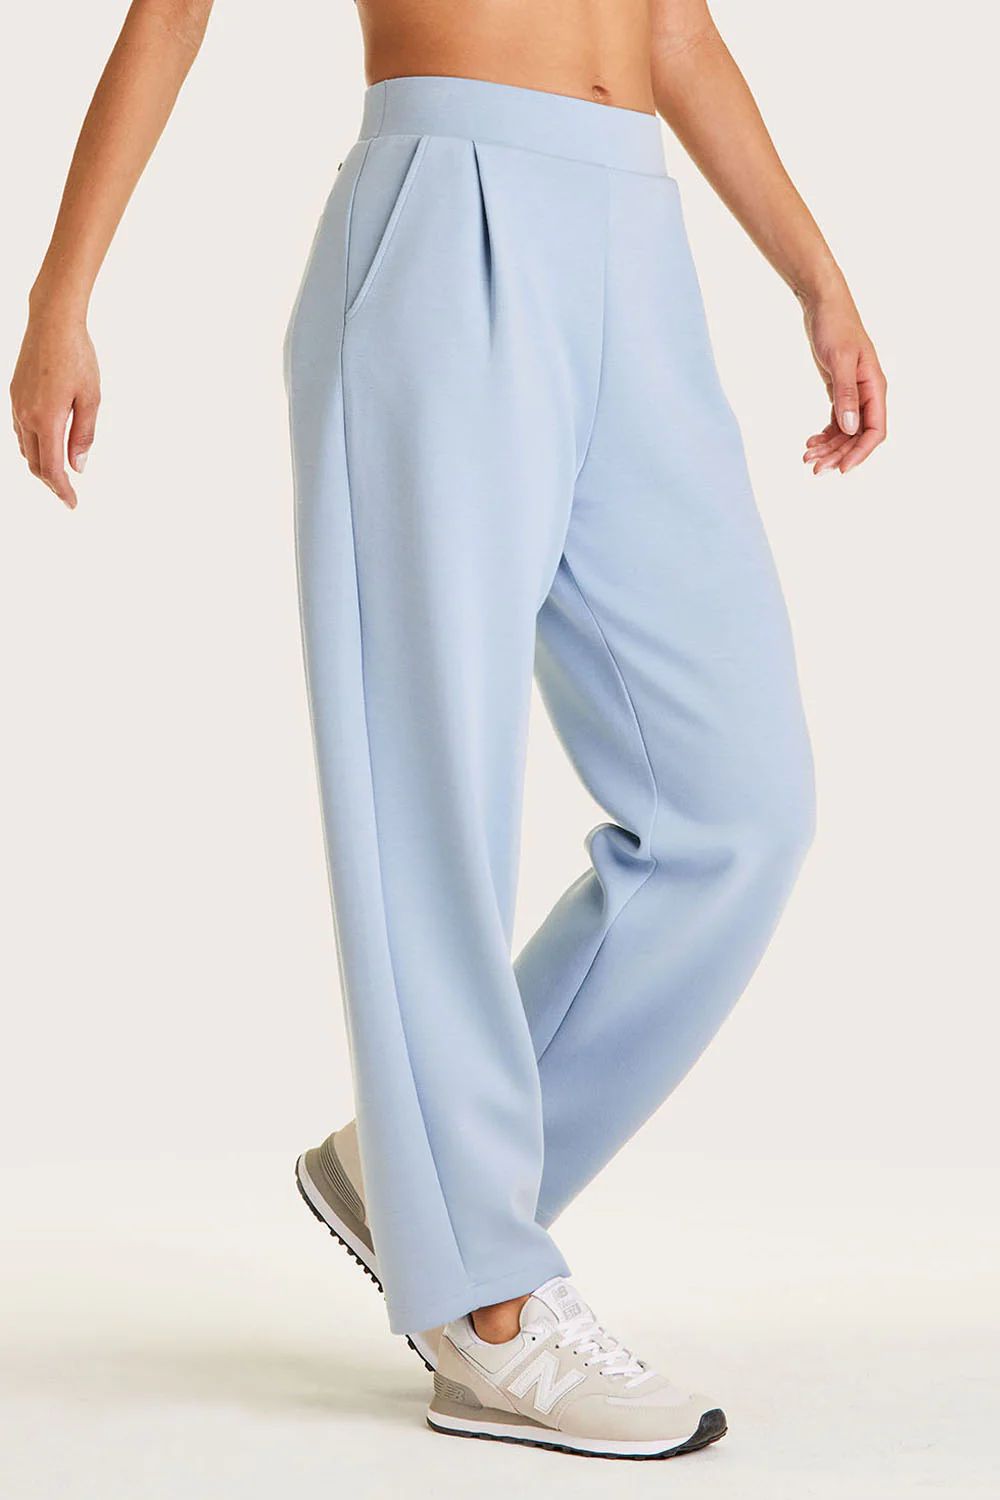 Phoebe Trouser - Light Blue Loose Fit Sweatpants | Alala | Alala